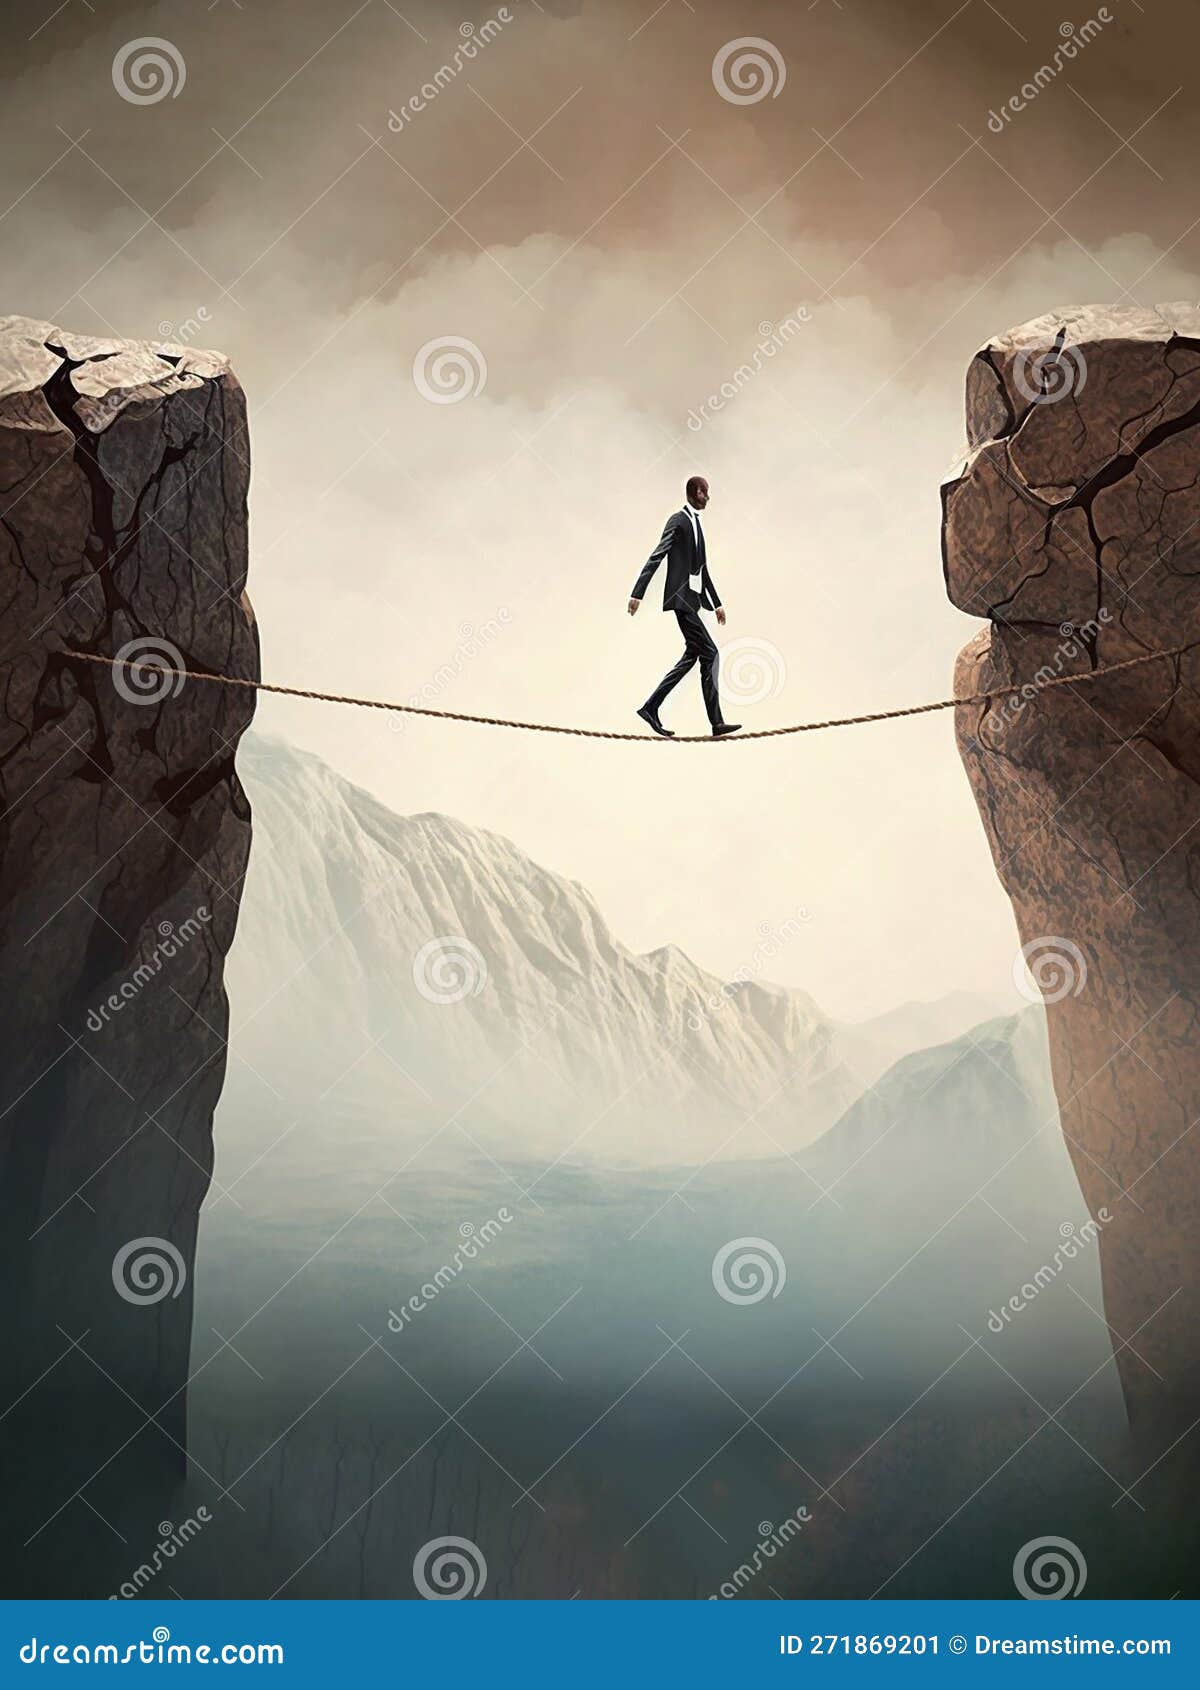 Businessman Walking on Tightrope between Rocks Stock Illustration